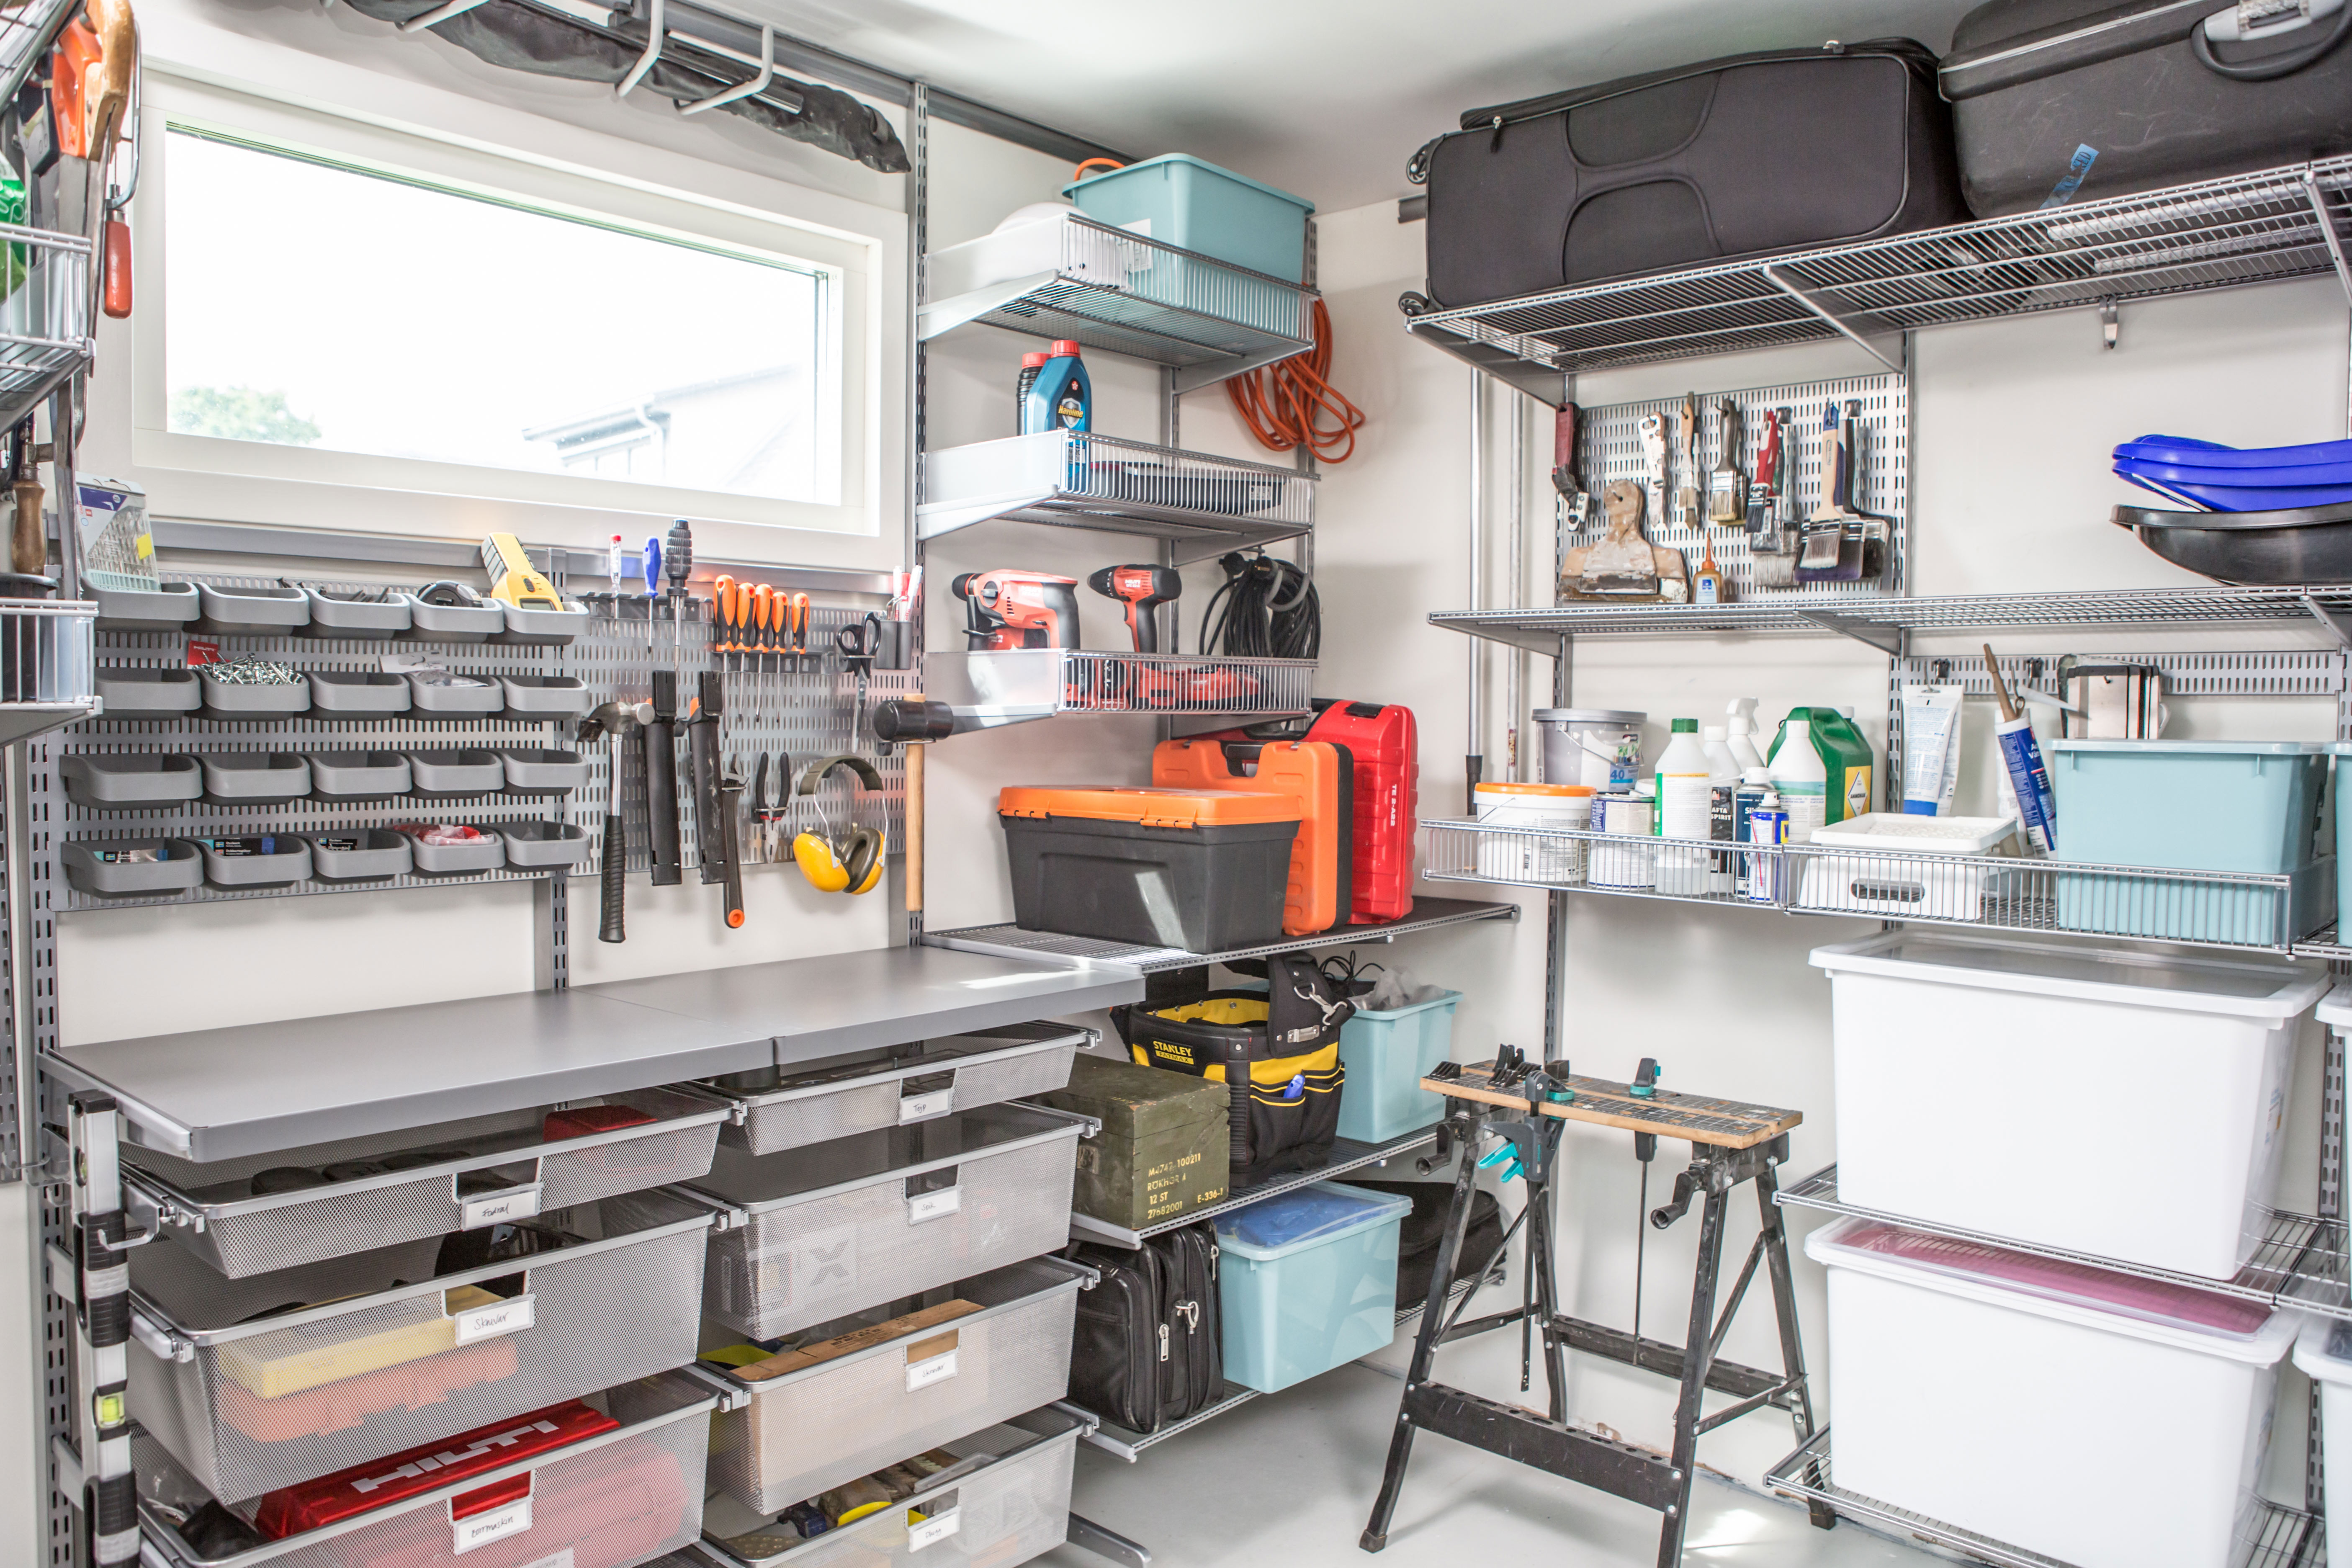 Plastic Bin Kit Wall Garage Storage Parts Bins Tool DIY Organiser Shelving Unit